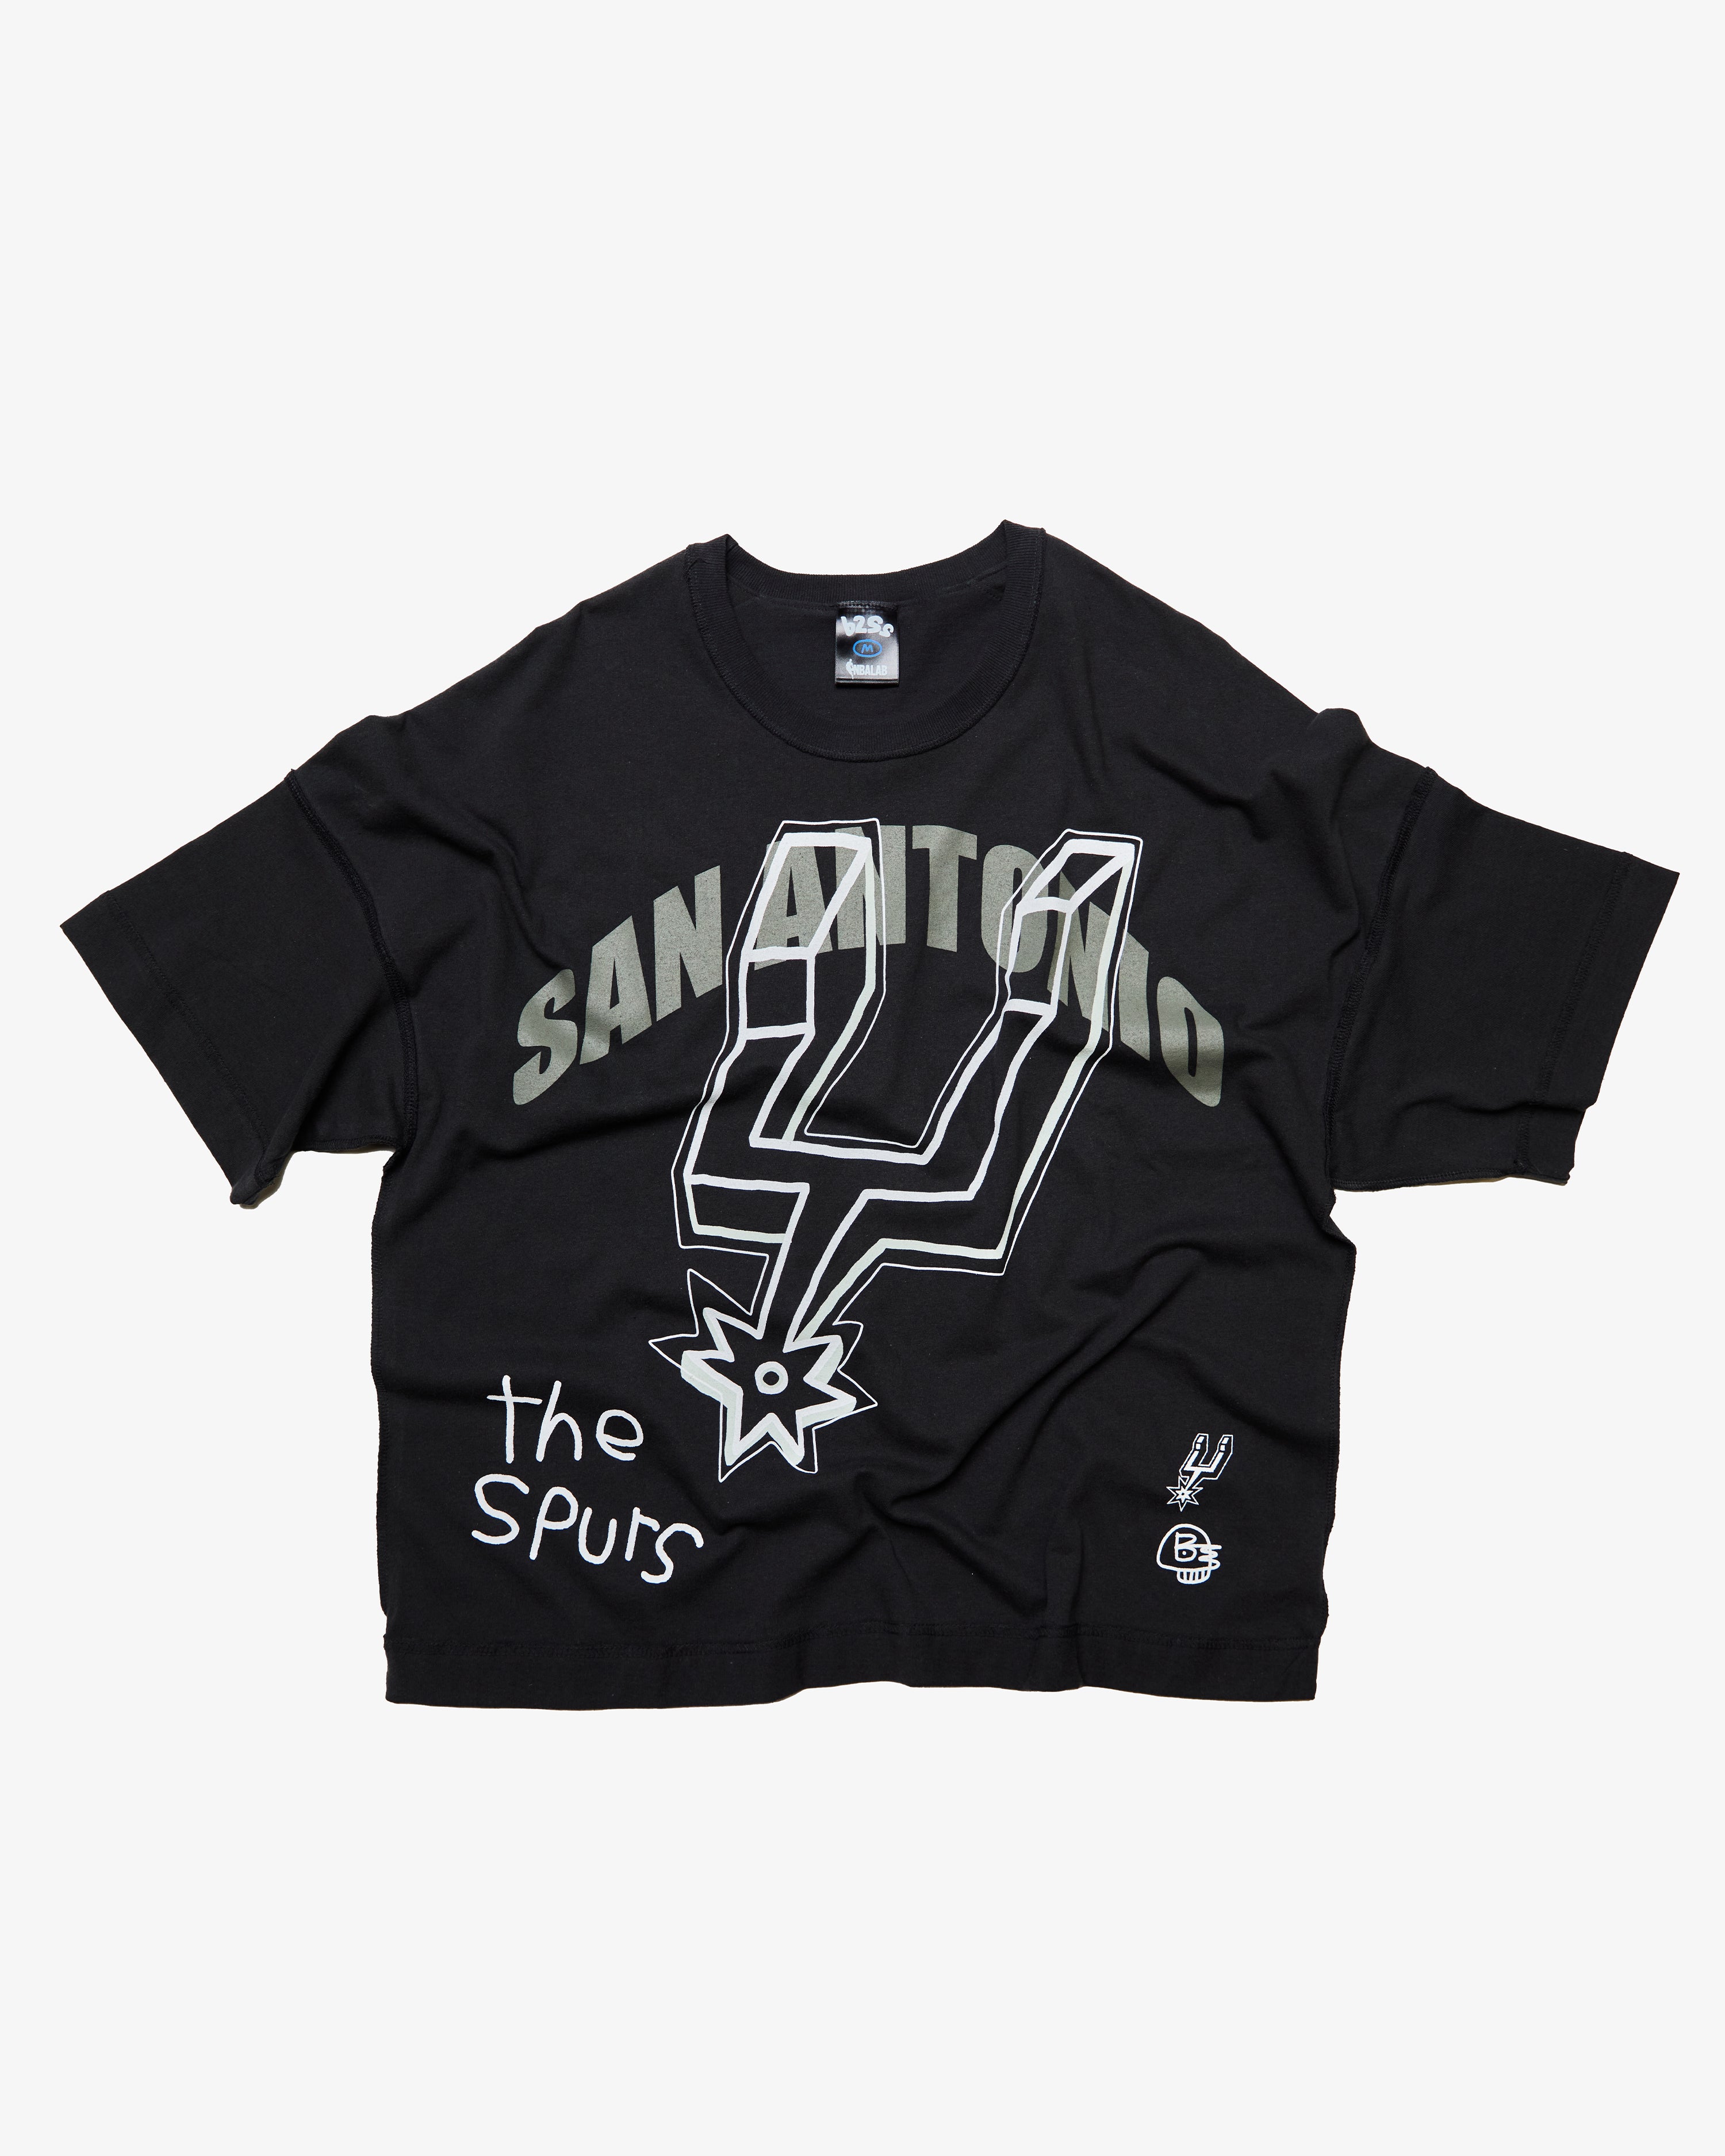 B2SS San Antonio Spurs NBA Tee Small